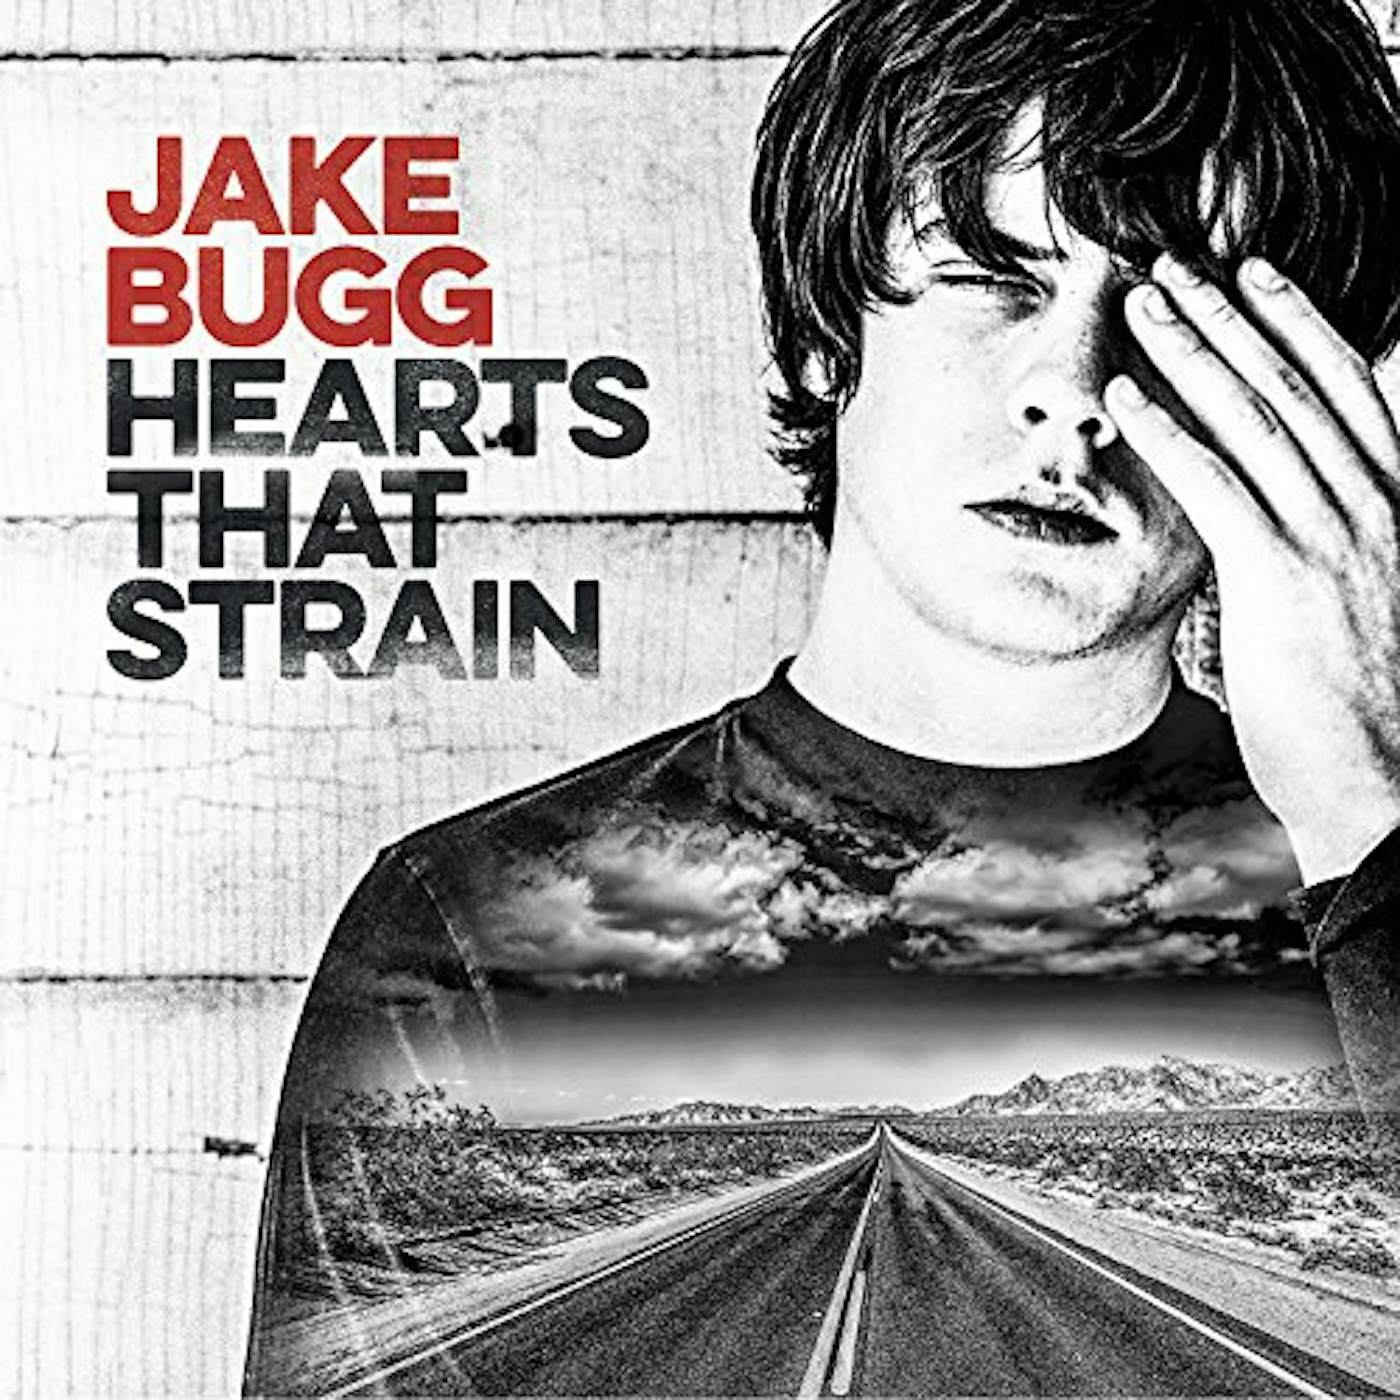 Jake Bugg Hearts That Strain Vinyl Record